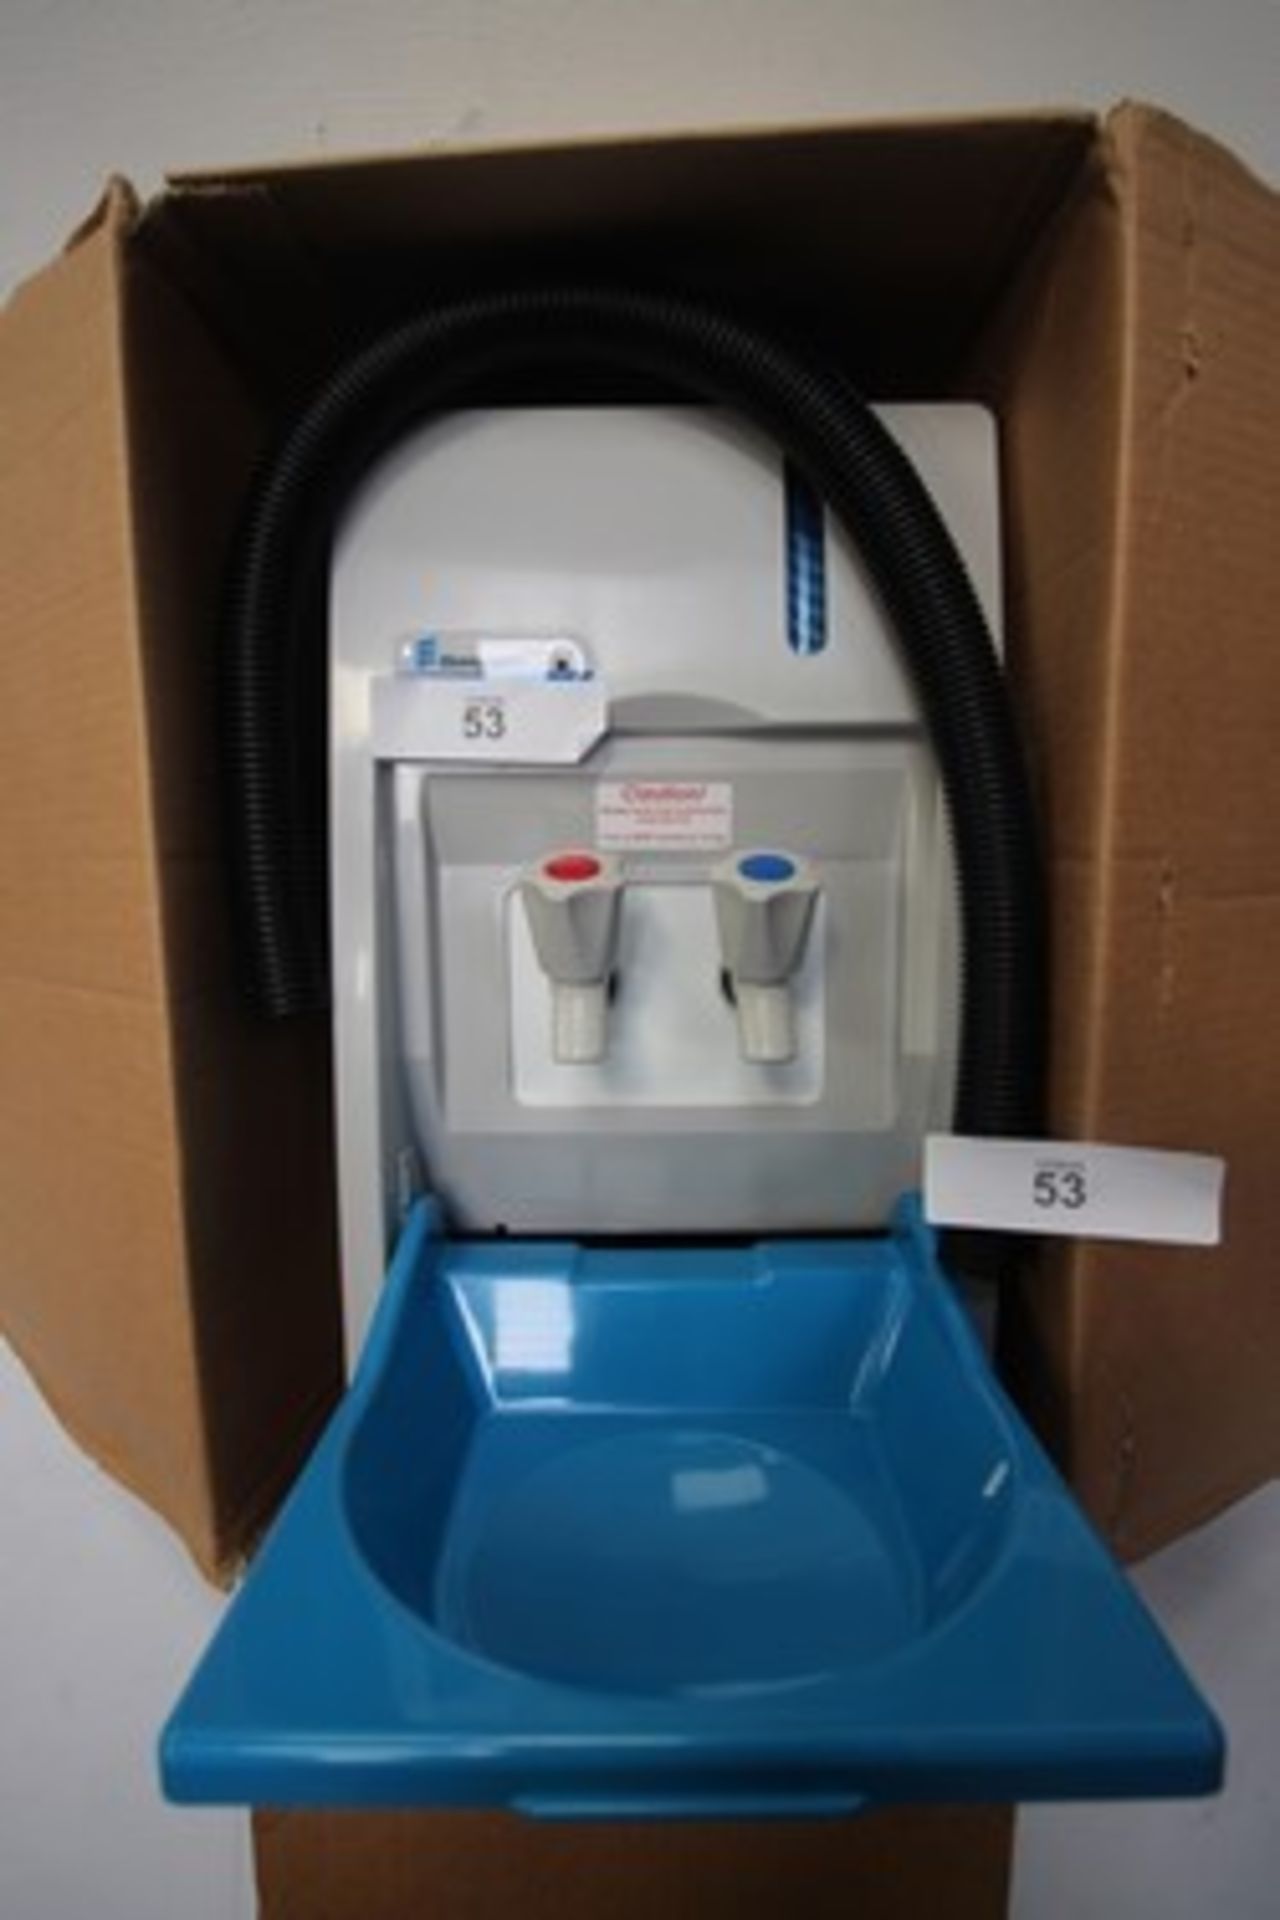 1 x Eberspacher 12v portable hand washing unit, model No: 29.2100.16.1025 - new in box (ES7)